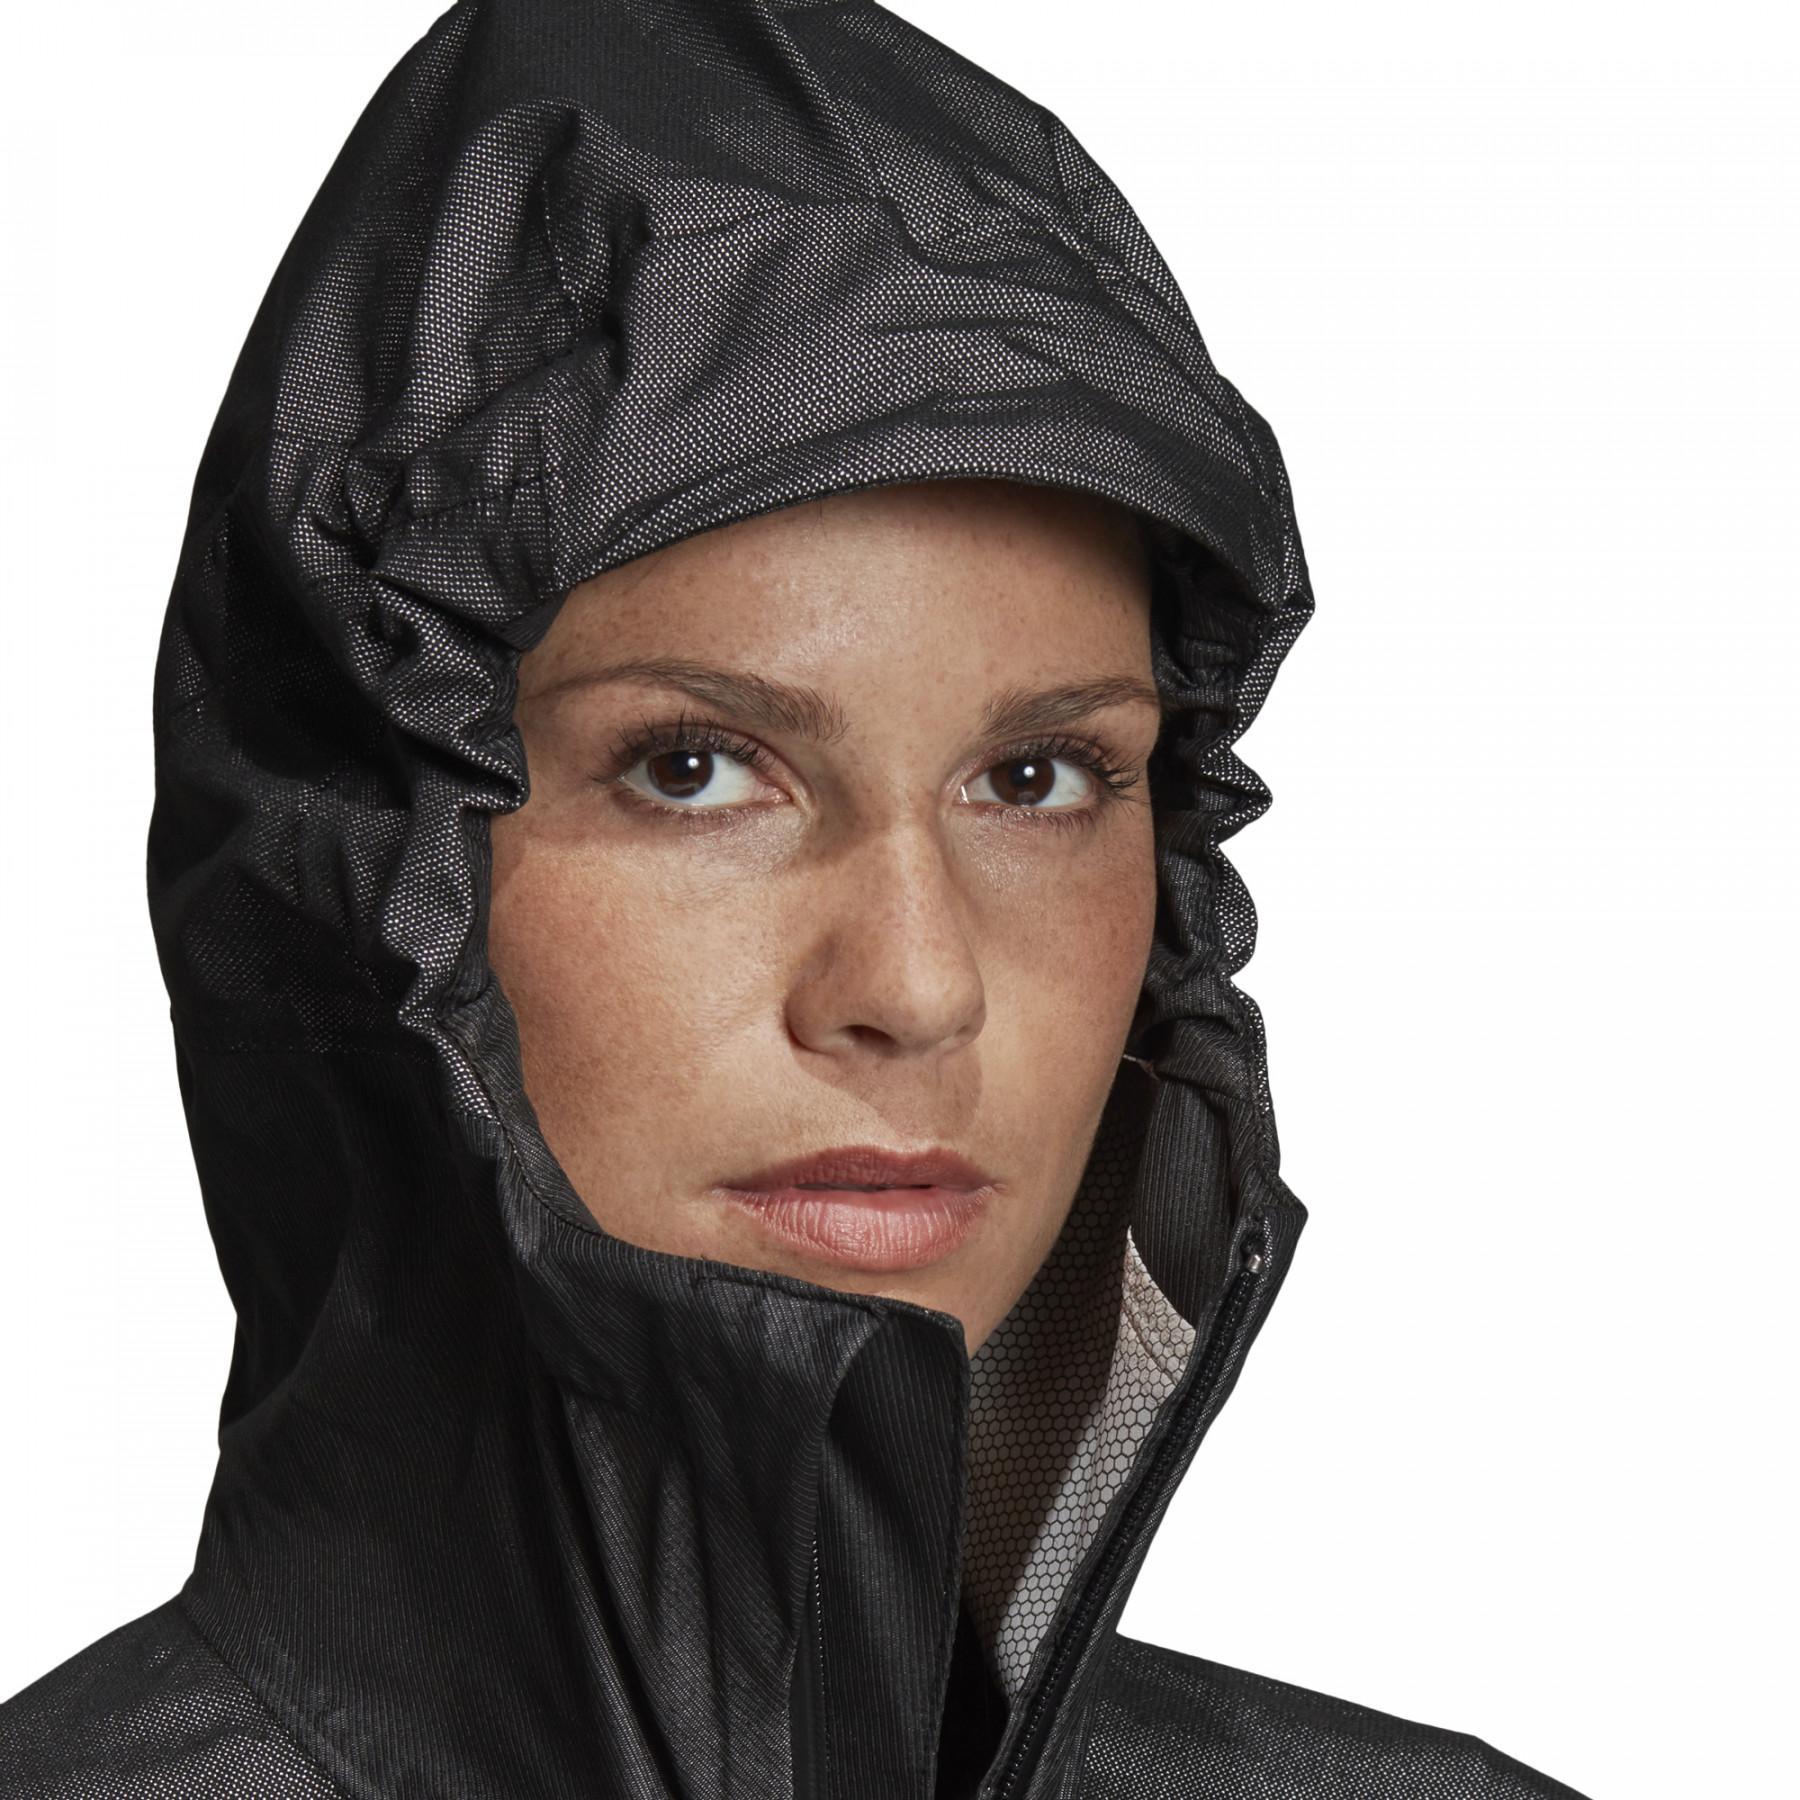 Women's jacket adidas Terrex Primeknit Rain